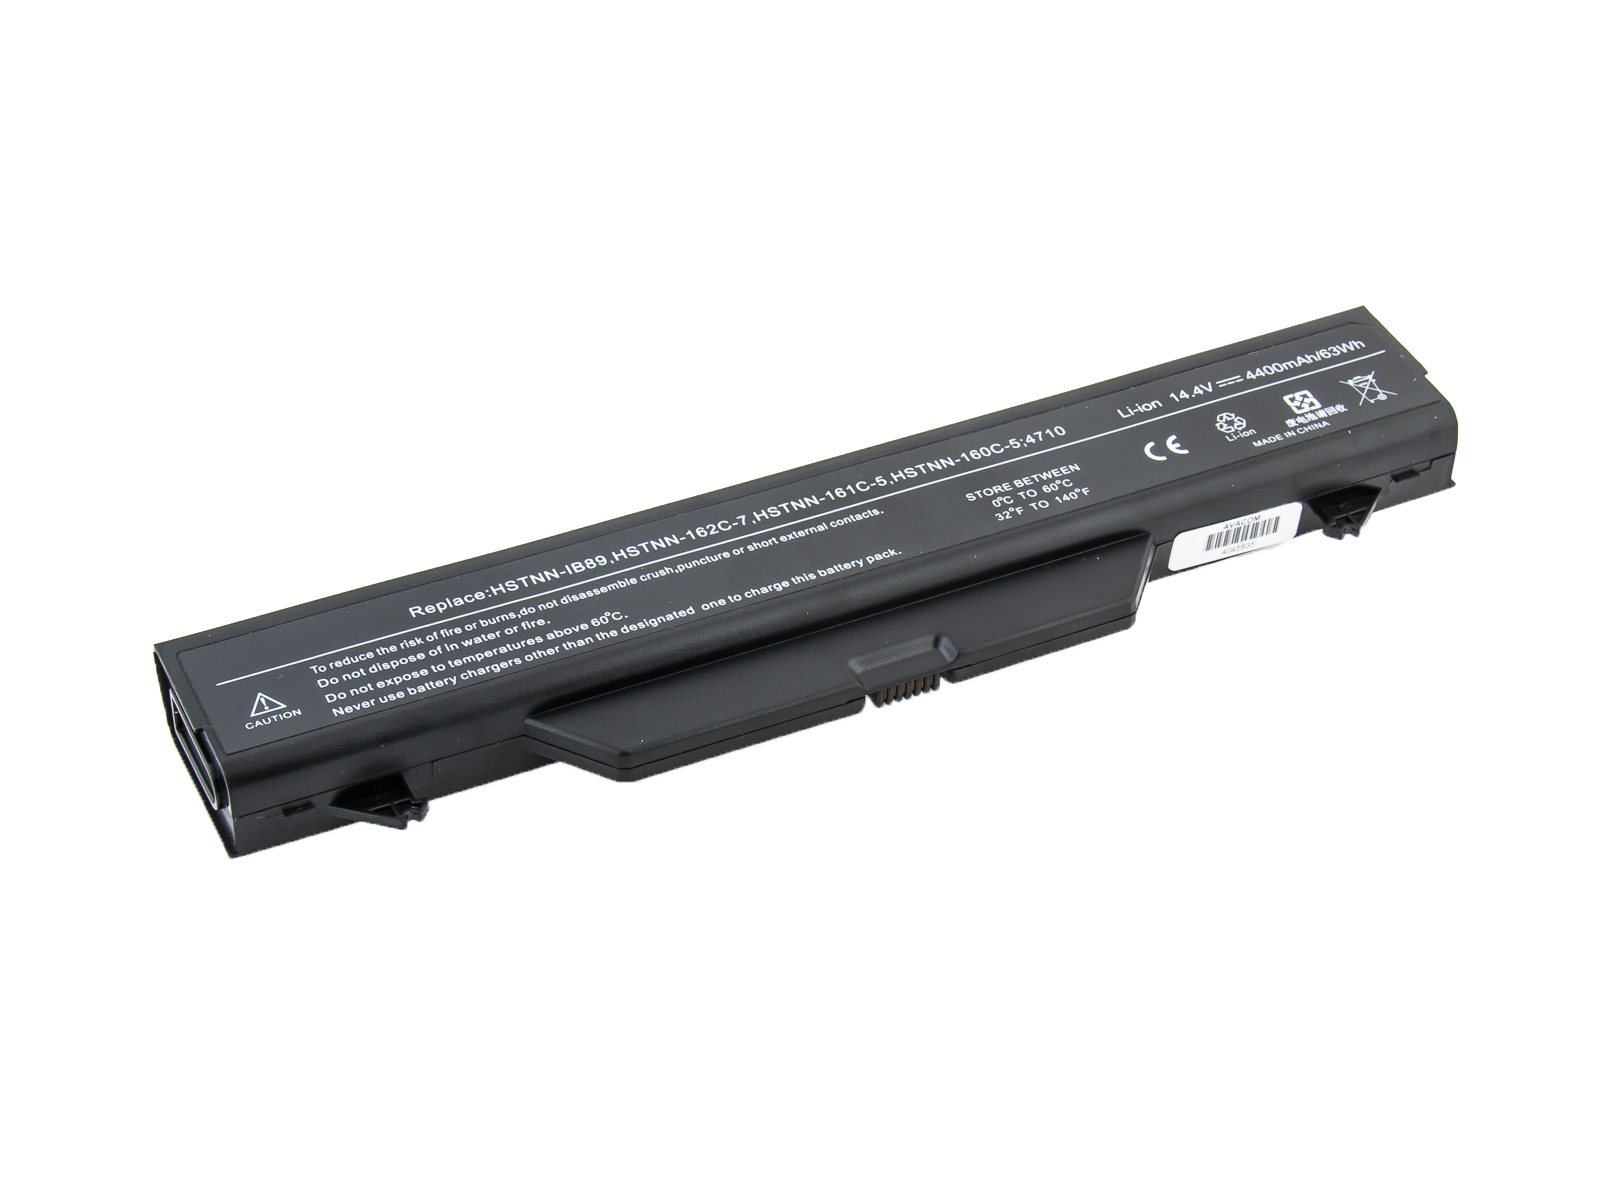 Avacom Baterie NOHP-PB45-N22 pro HP ProBook 4510s, 4710s, 4515s series Li-Ion 14,4V 4400mAh